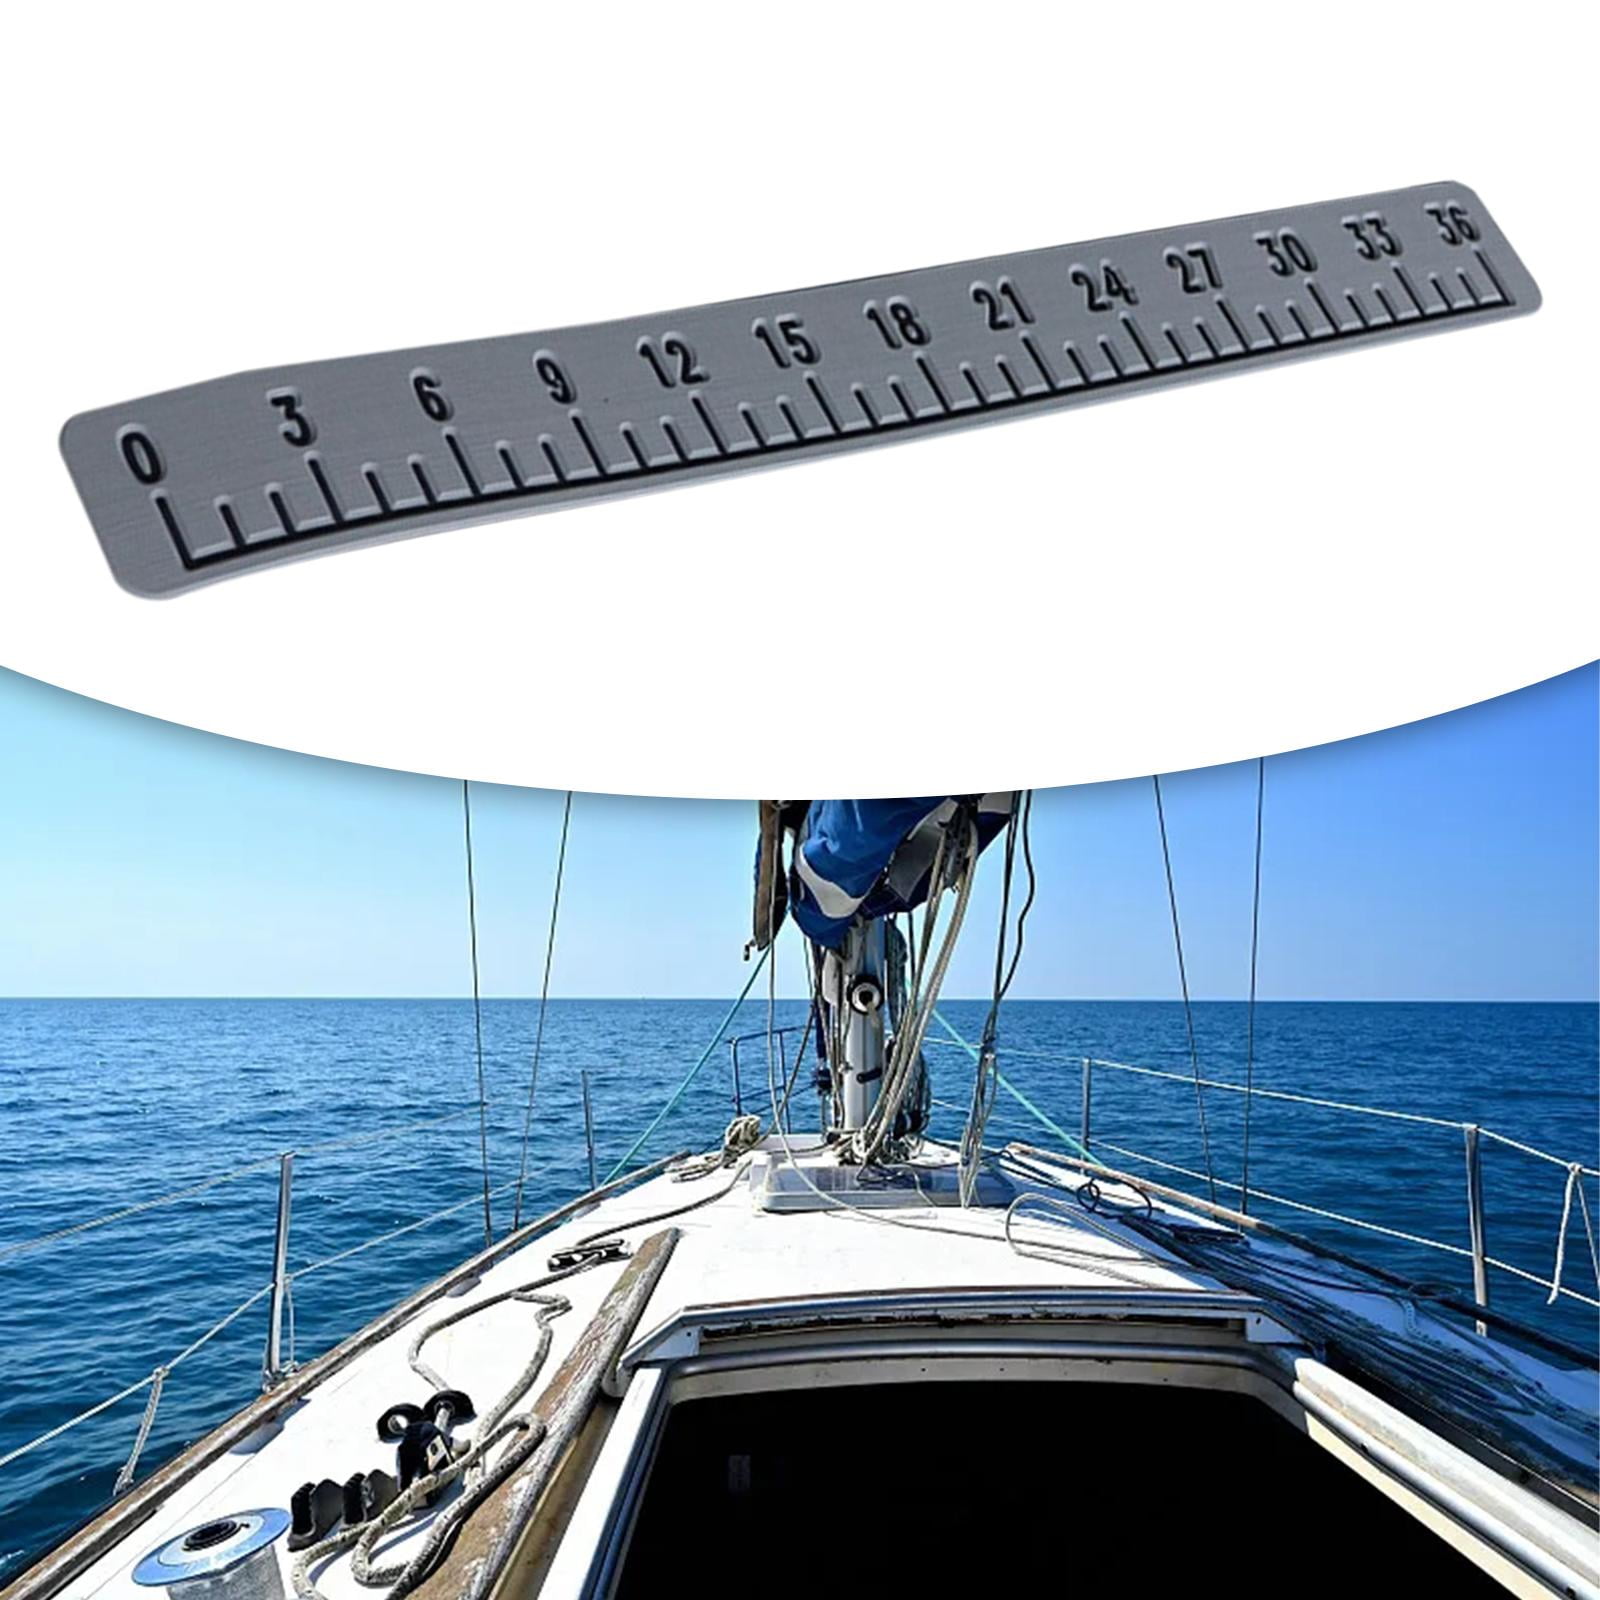 Calcutta BR56570 Fish Measuring Tape Stick on Paddle Kayak Boat